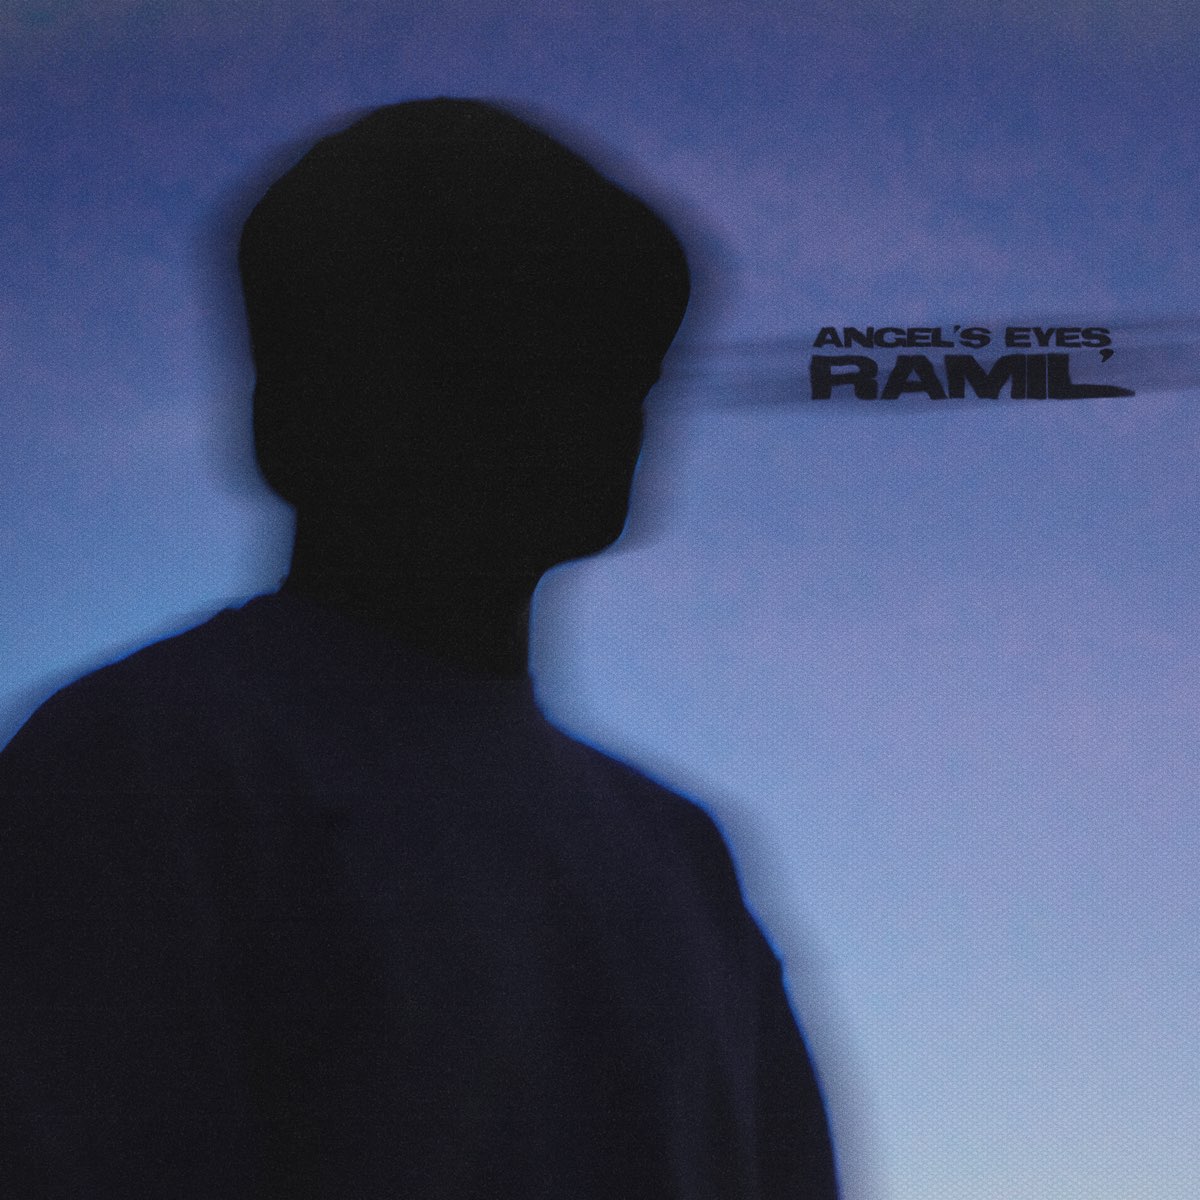 Ramil&#039; Angel&#039;s Eyes cover artwork